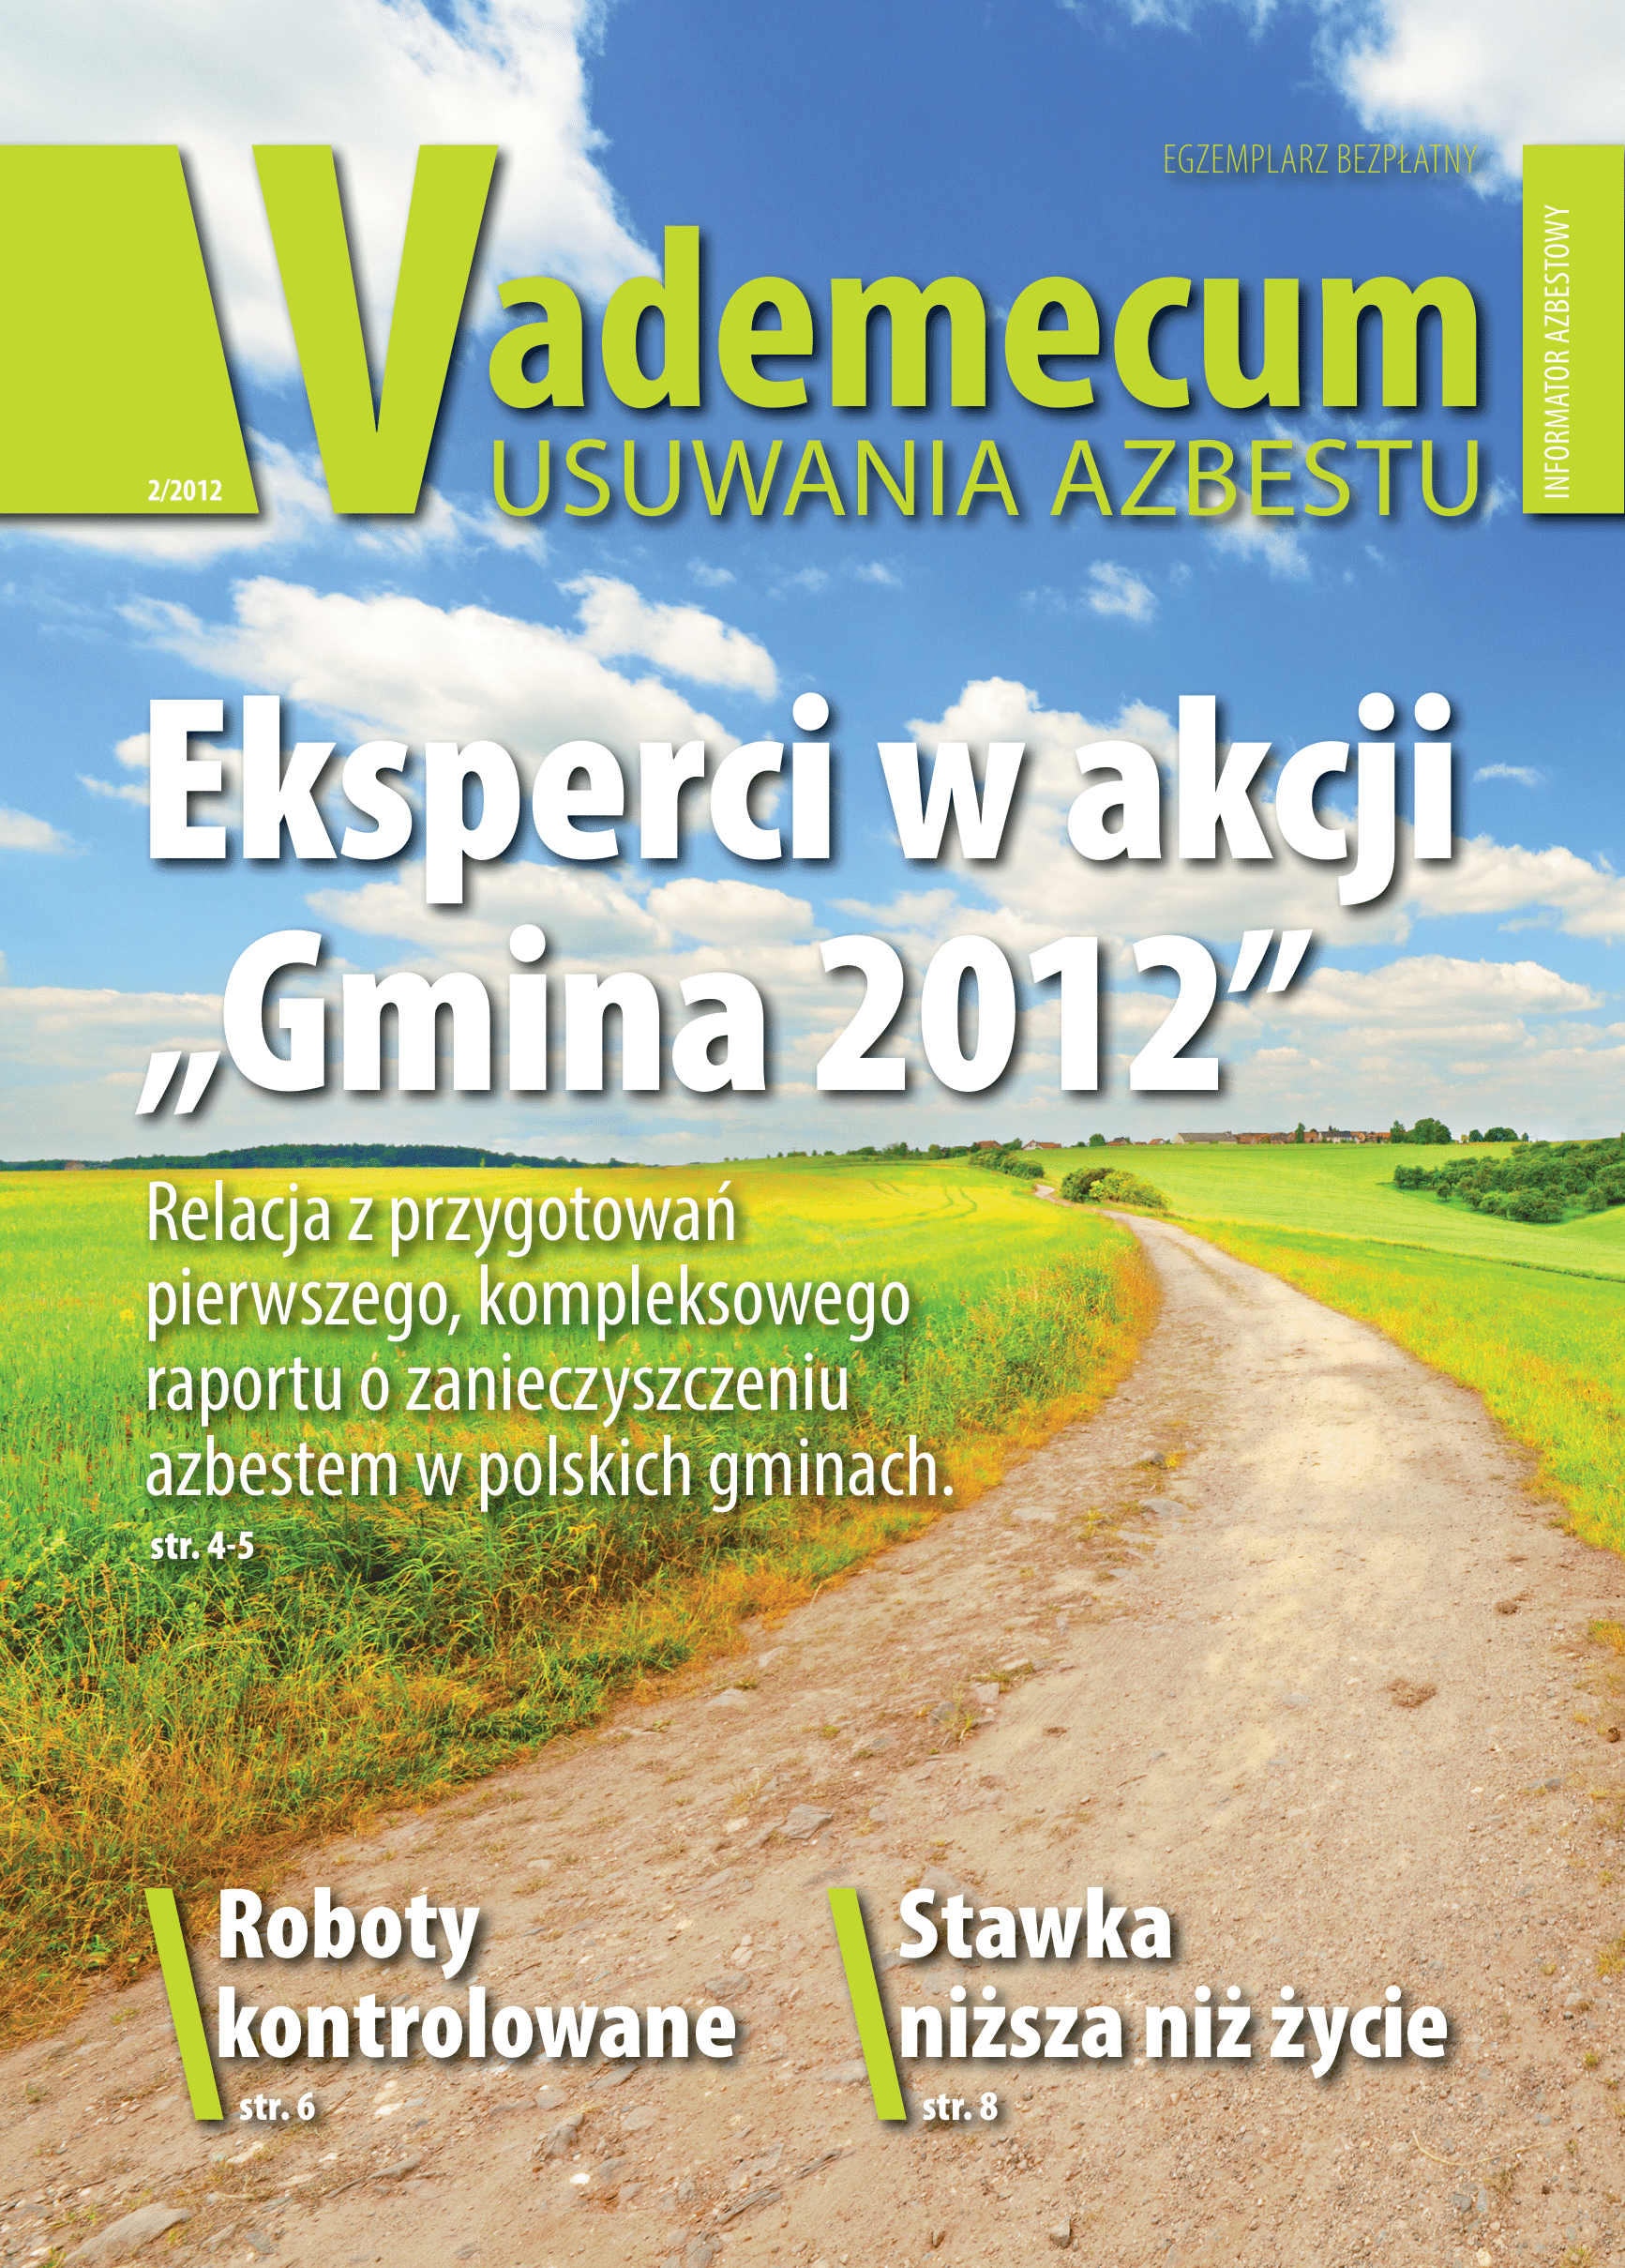 Vademecum-02-01.png